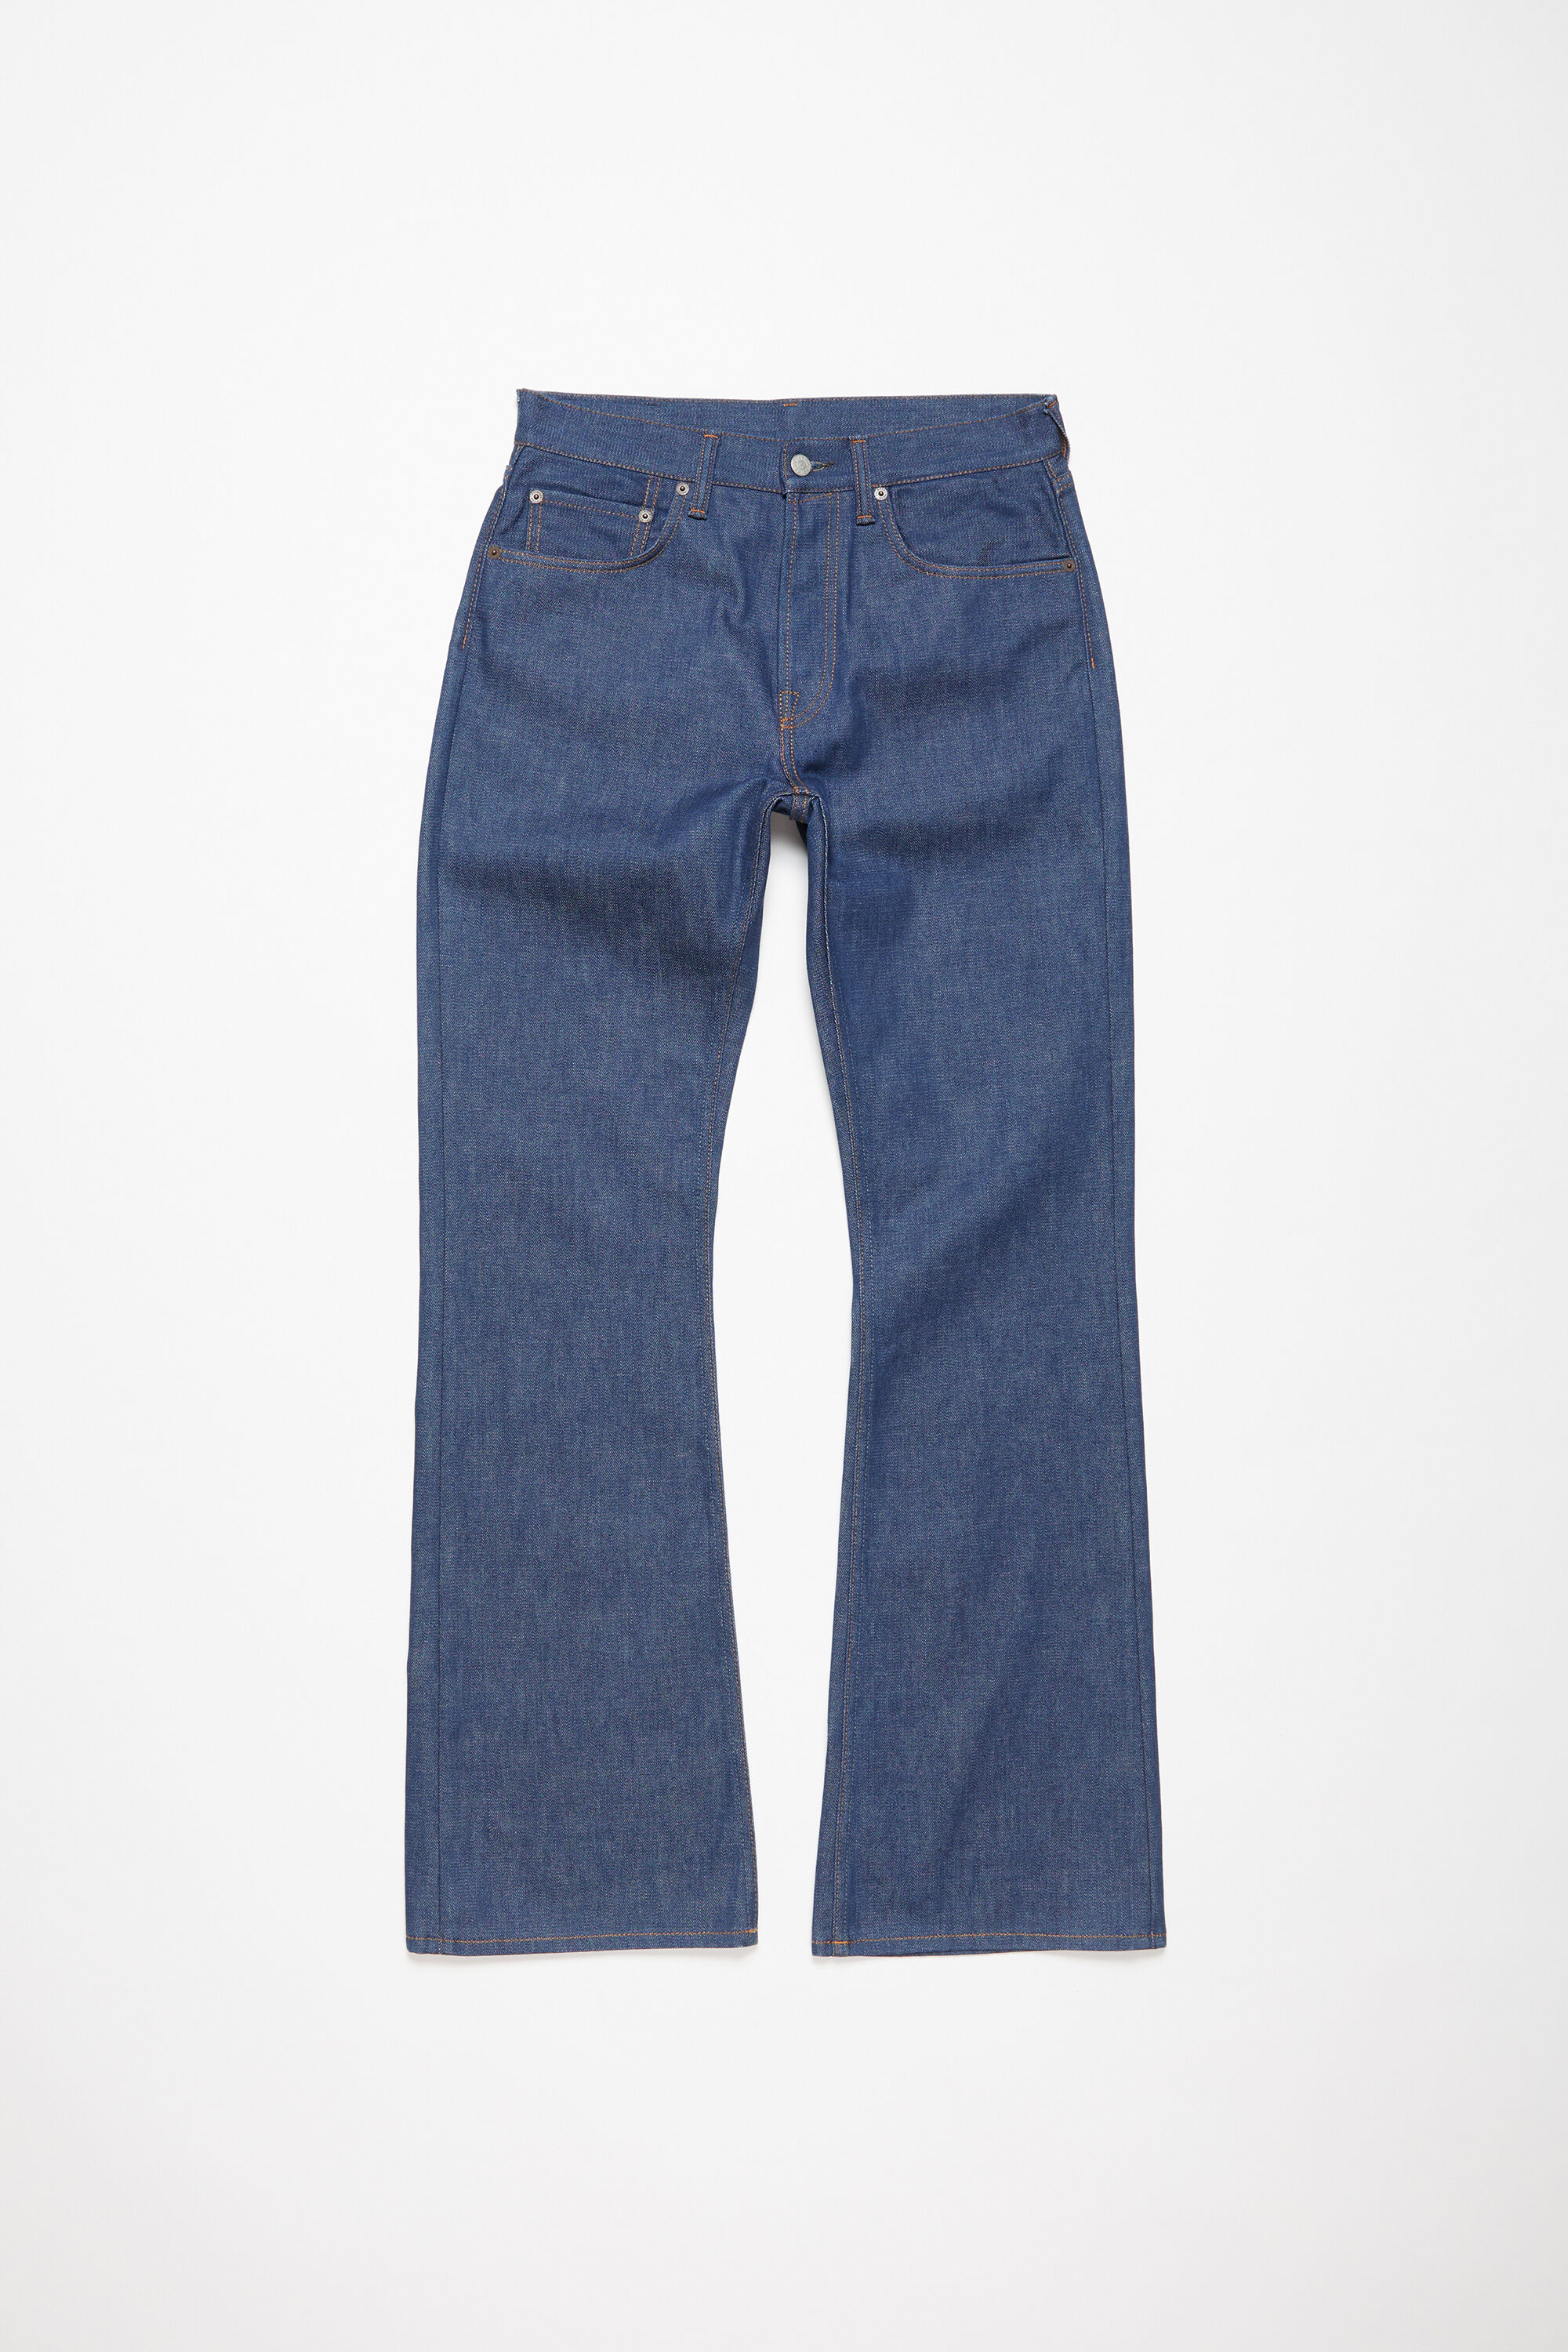 Acne Studios - Regular fit jeans - 1992 - Indigo blue